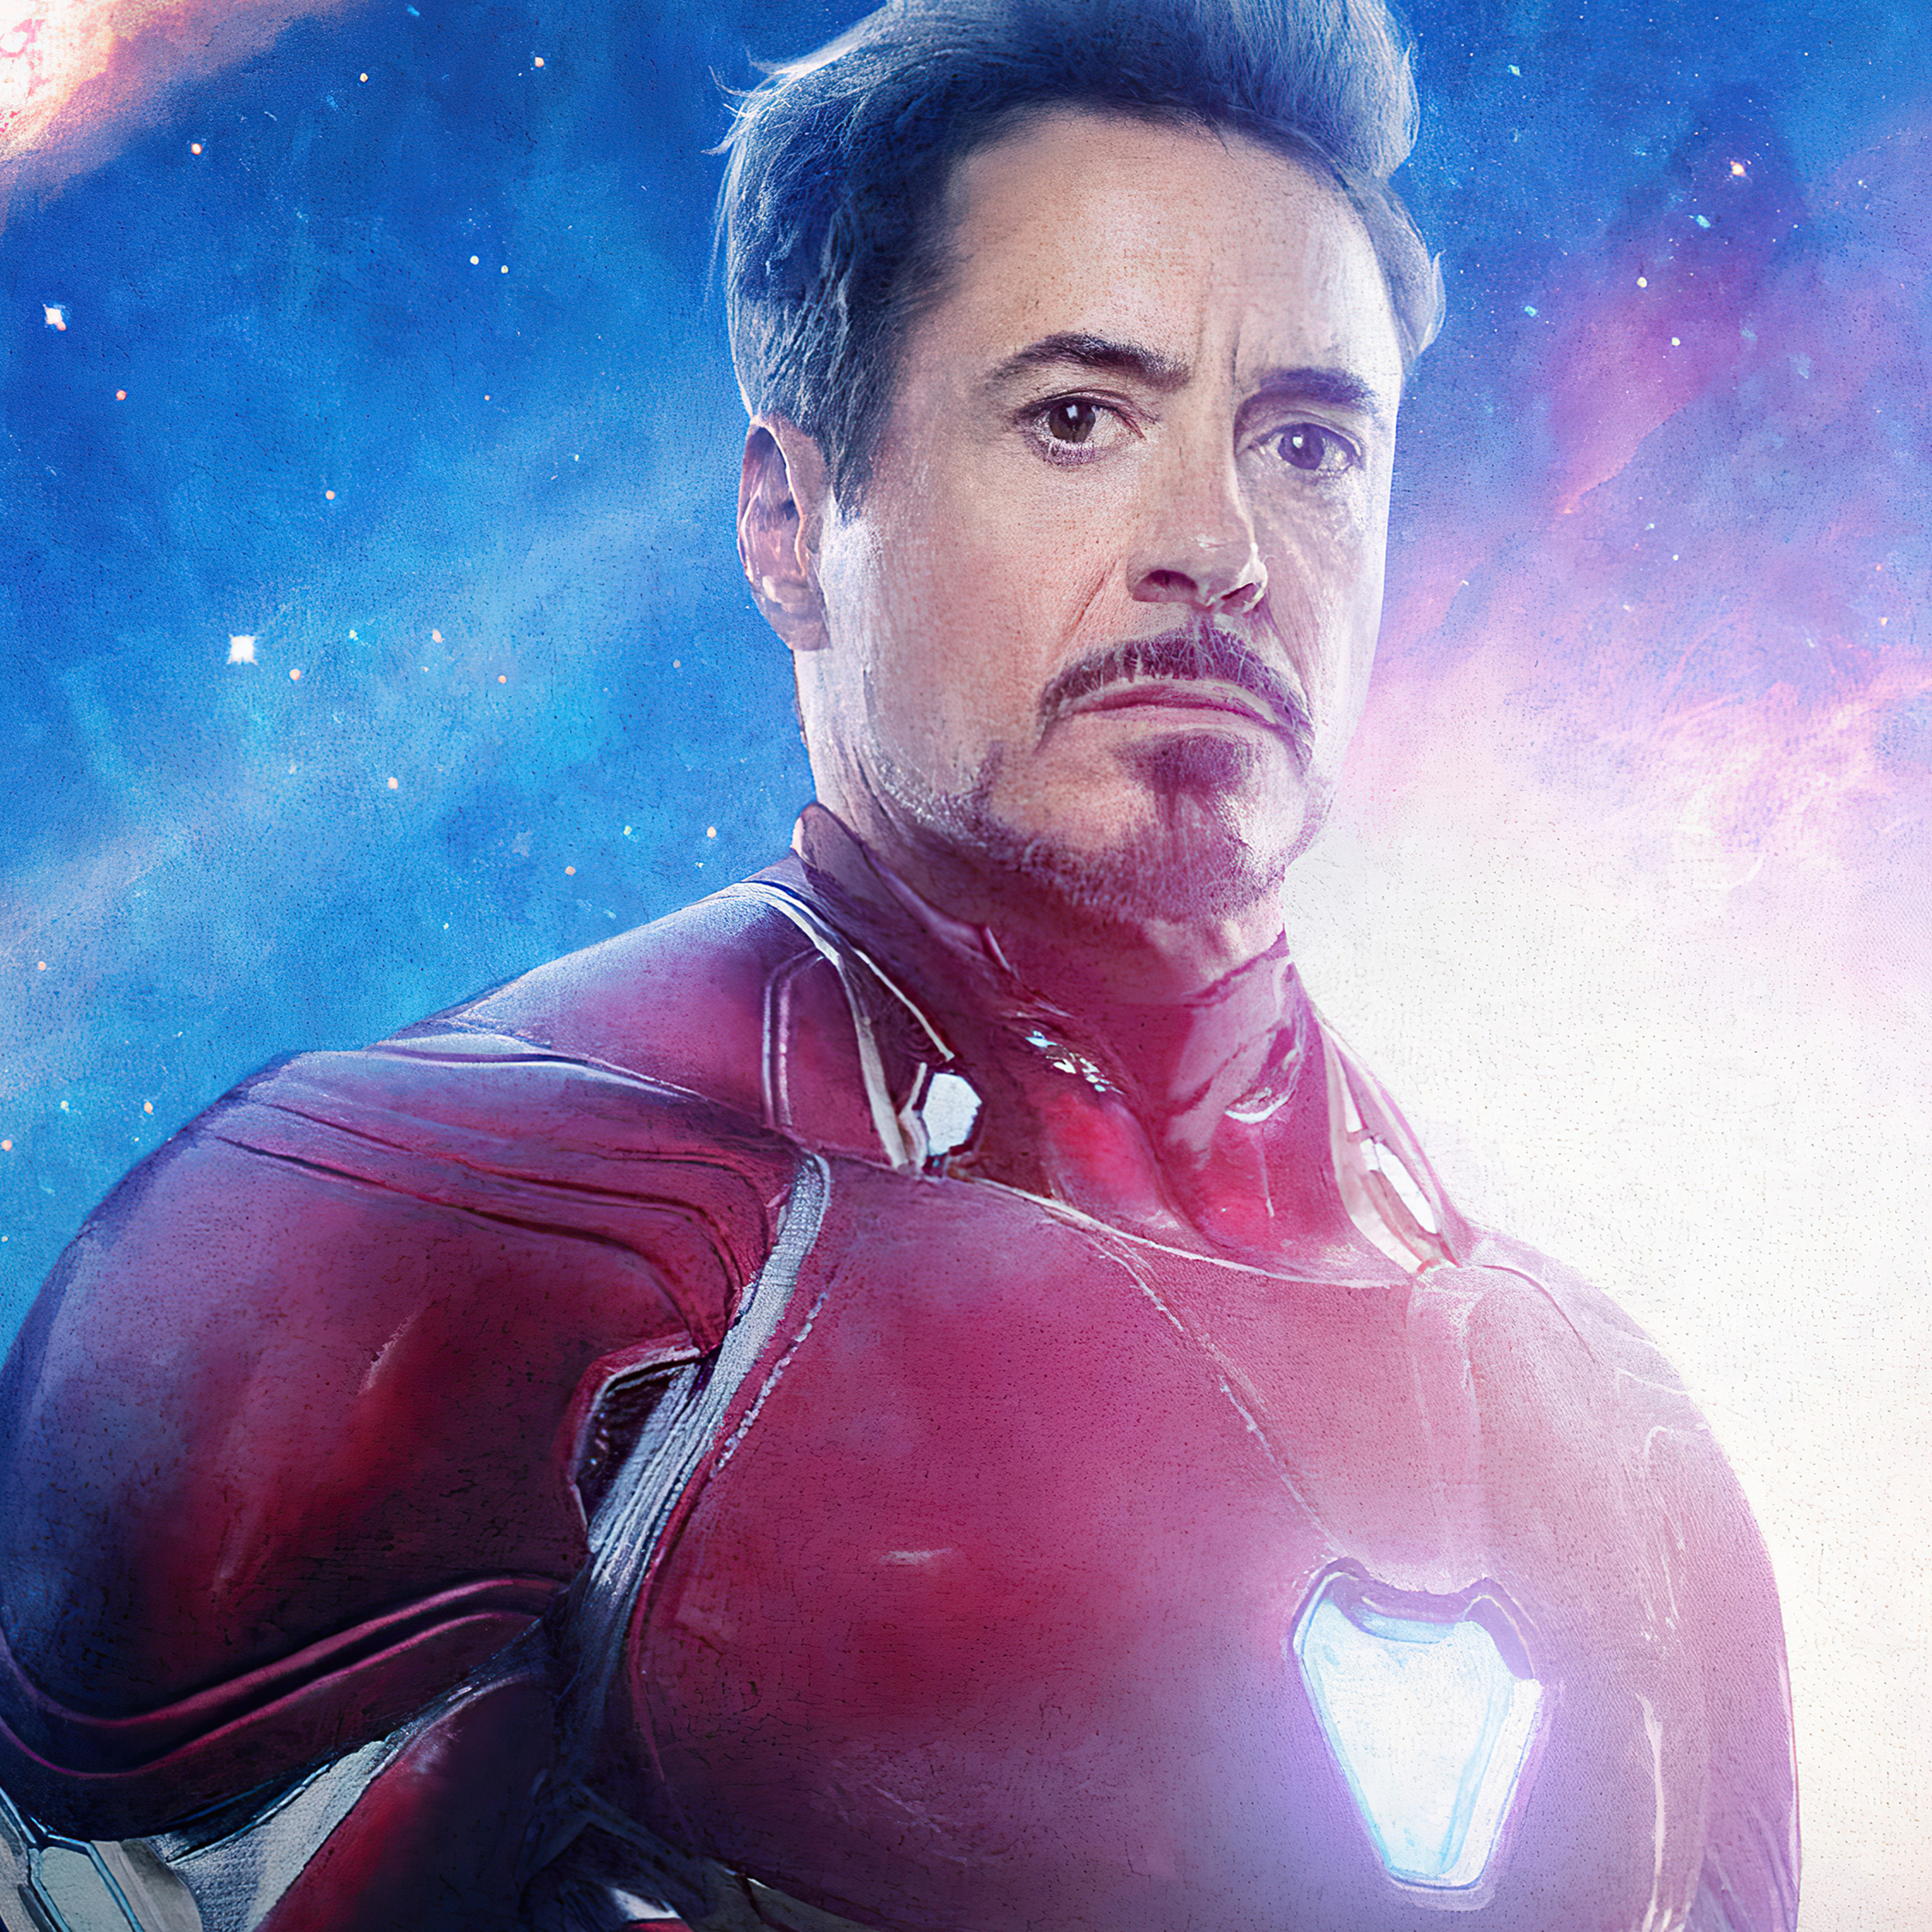 Tony Stark Iron Man iPad Pro Retina Display HD 4k Wallpaper, Image, Background, Photo and Picture